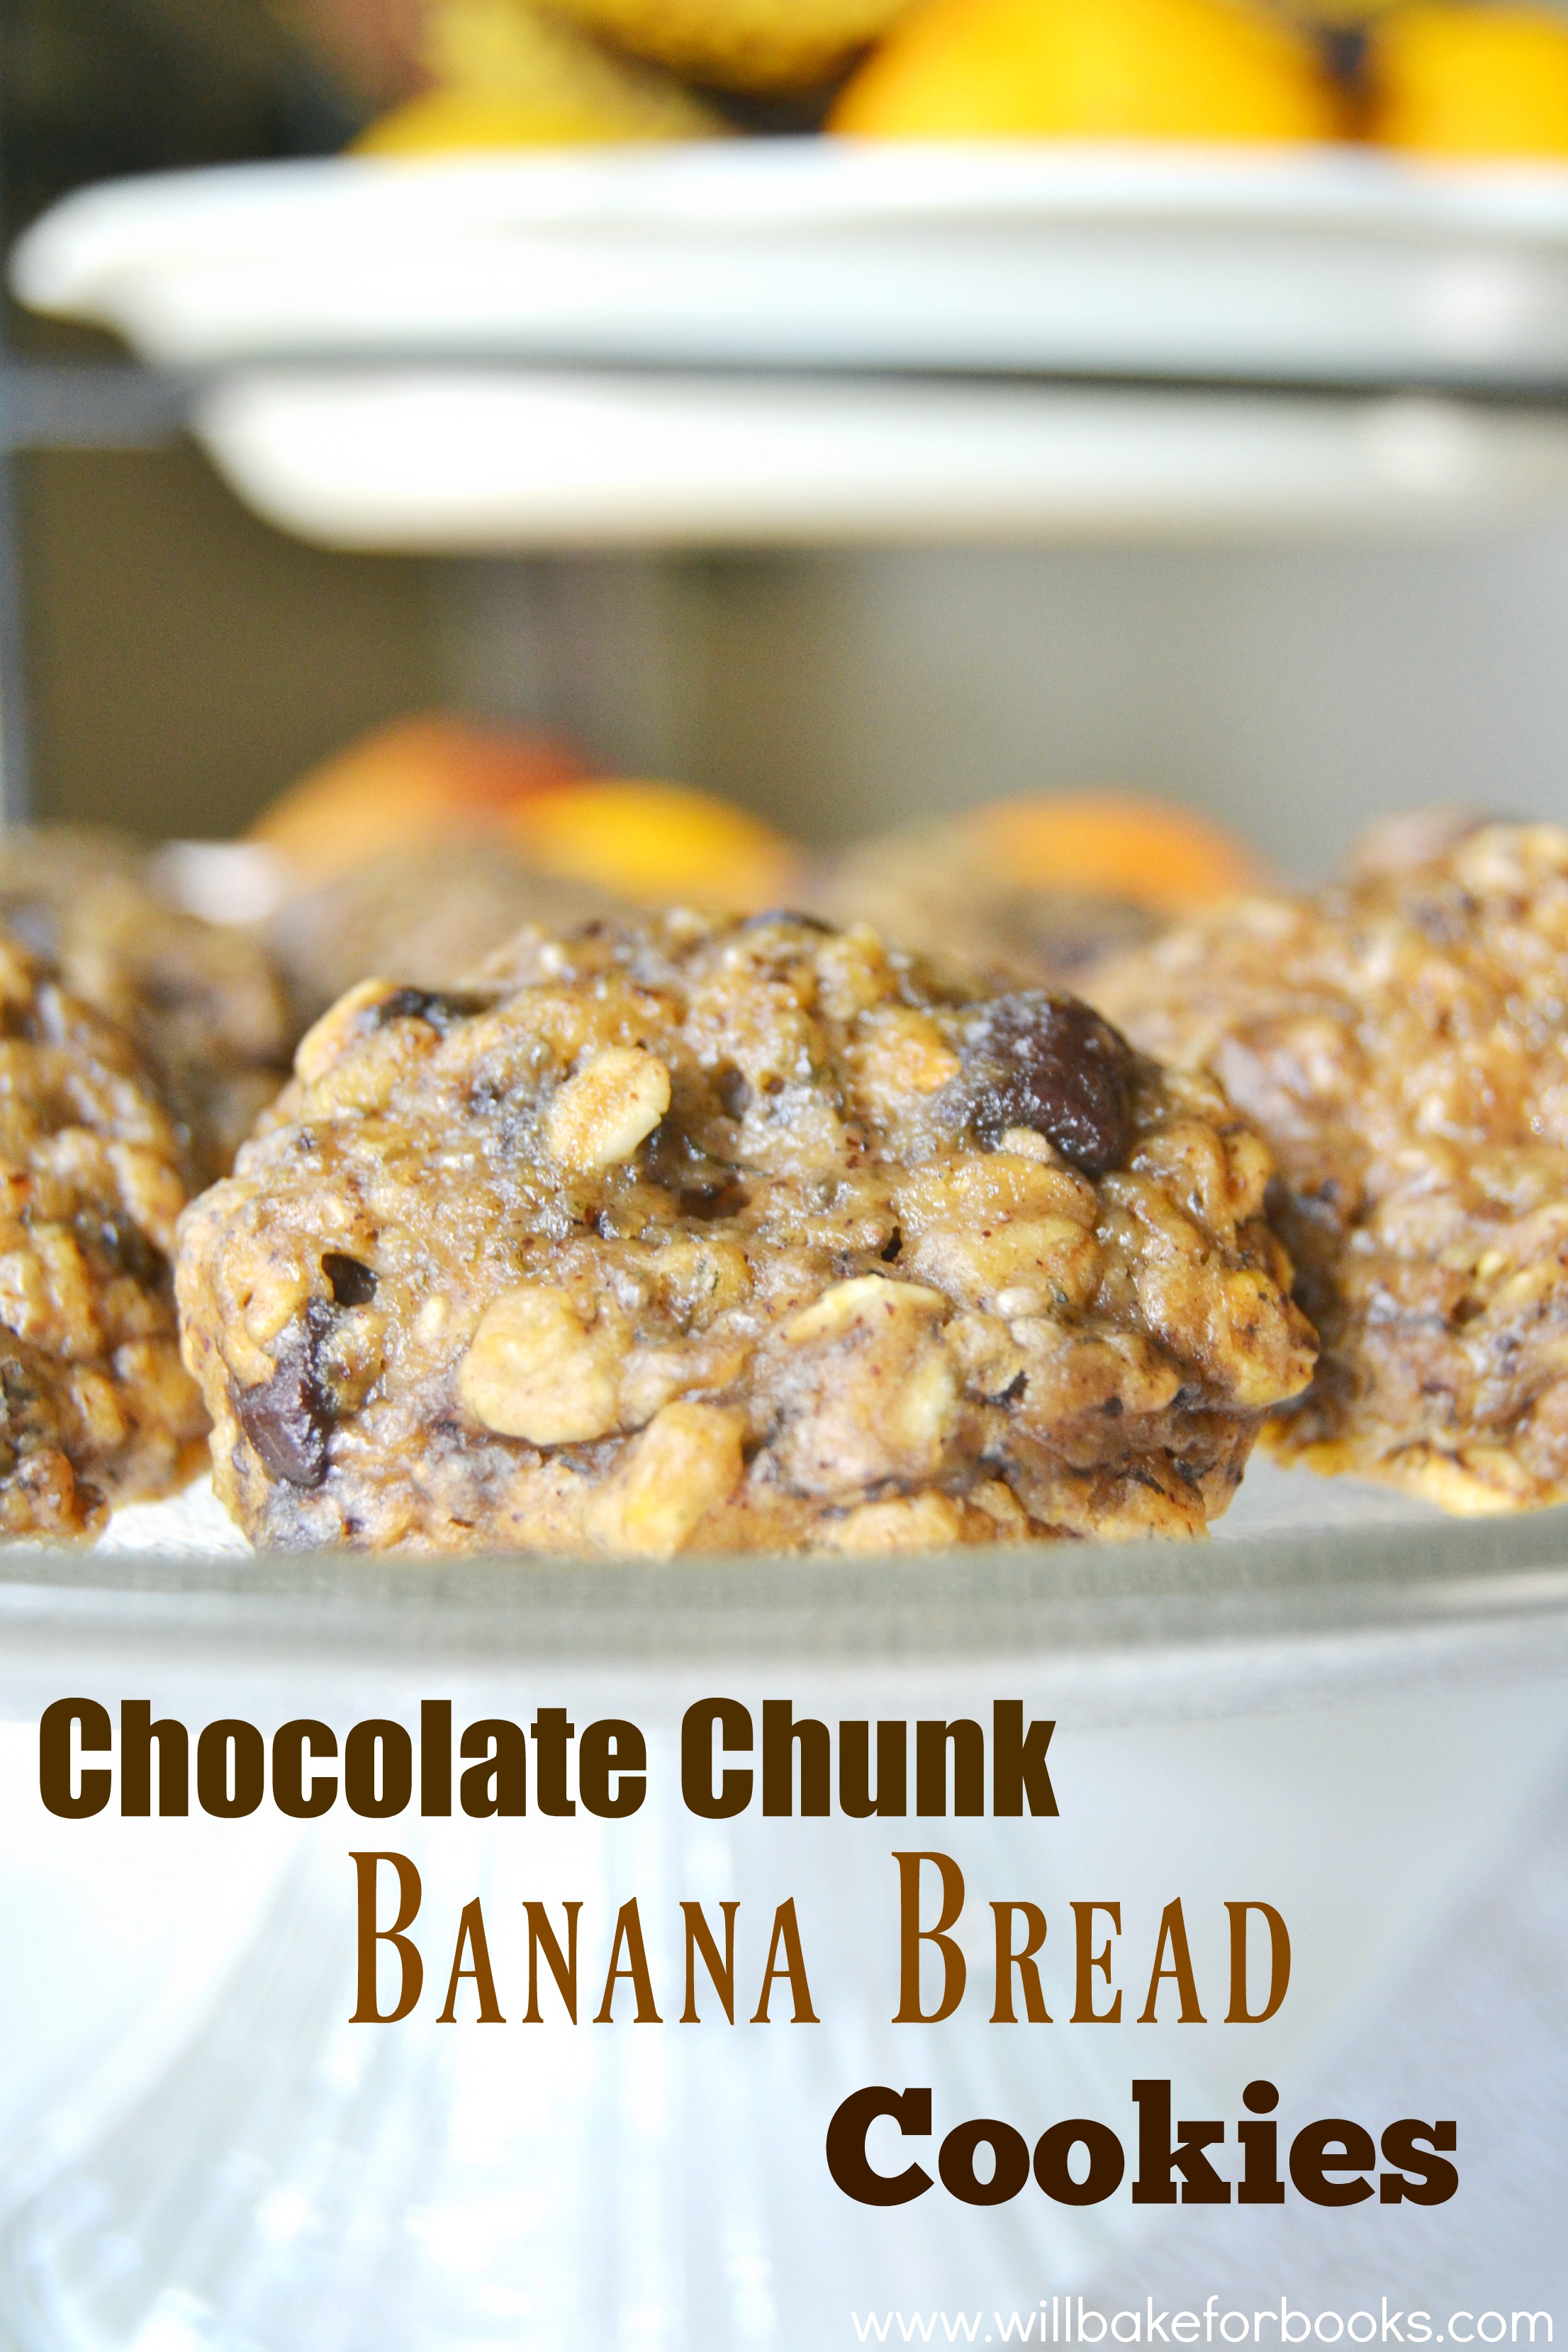 Chocolate Chunk Banana Bread Cookies from willbakeforbooks.com #vegan